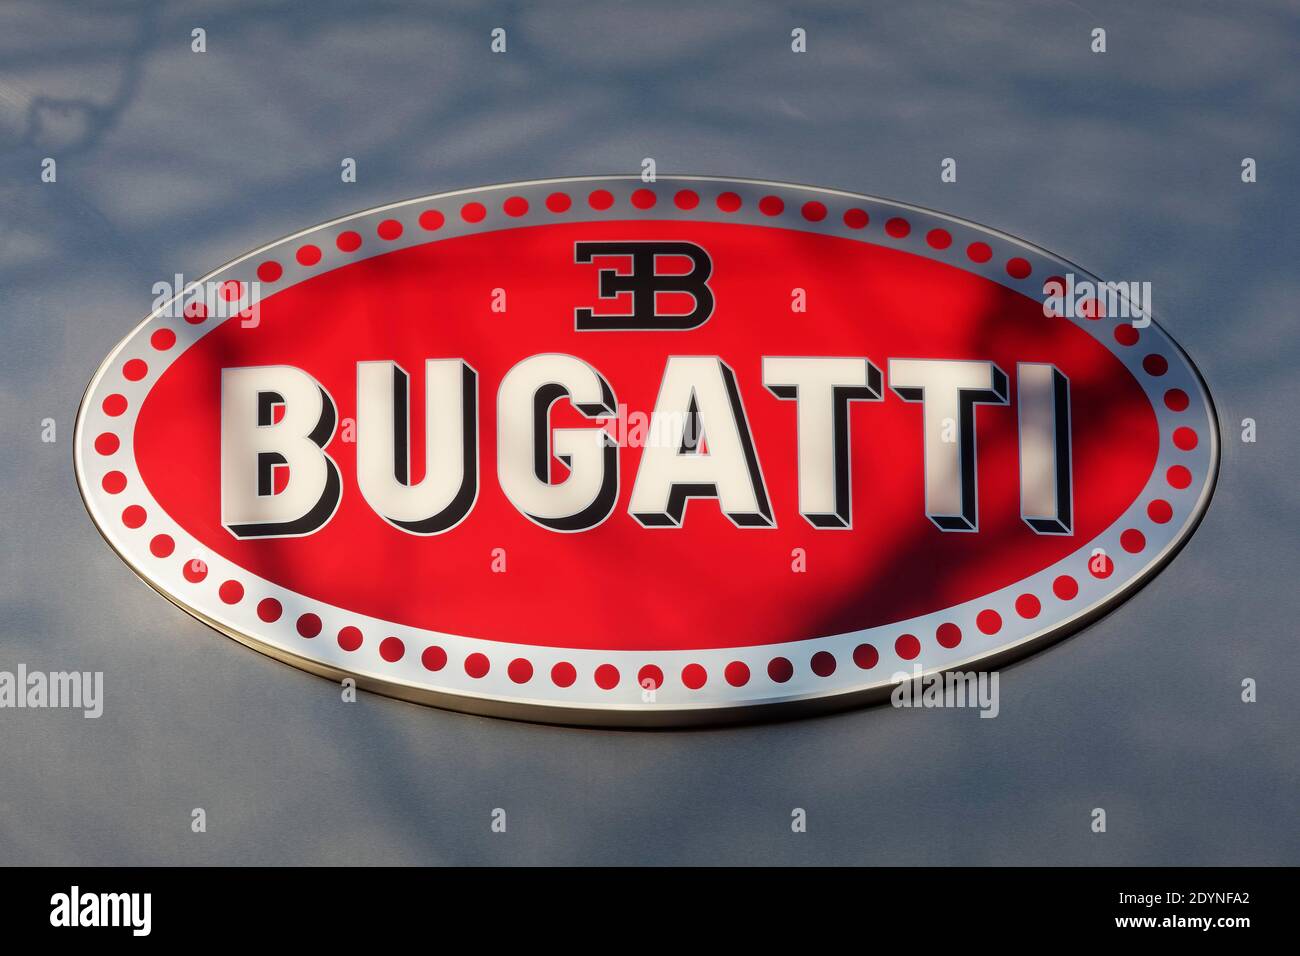 File:Bugatti logo.svg - Wikipedia